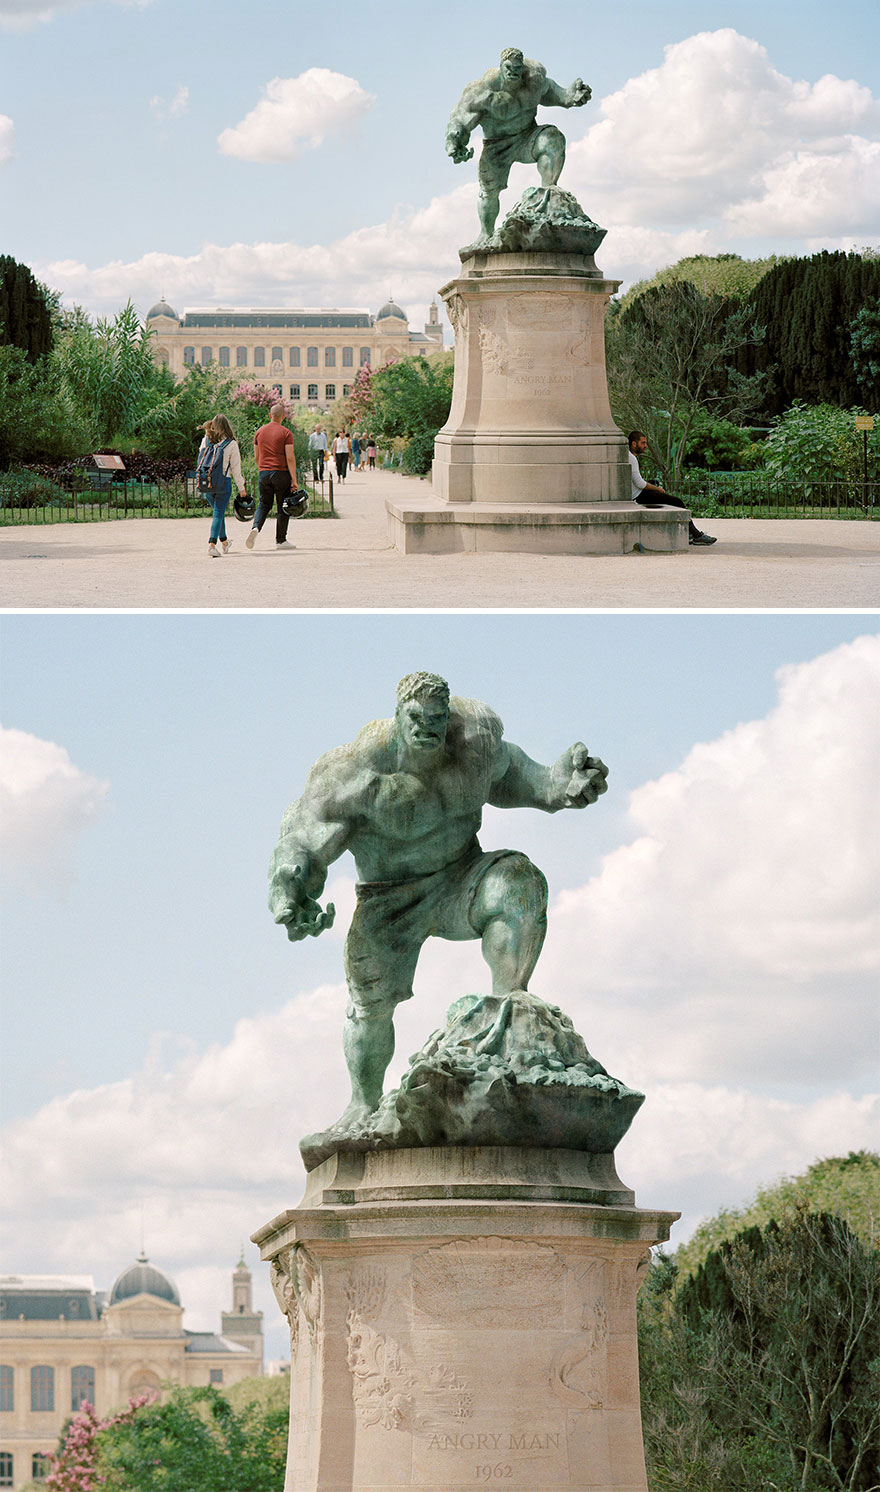 Angry Man (The Incredible Hulk)